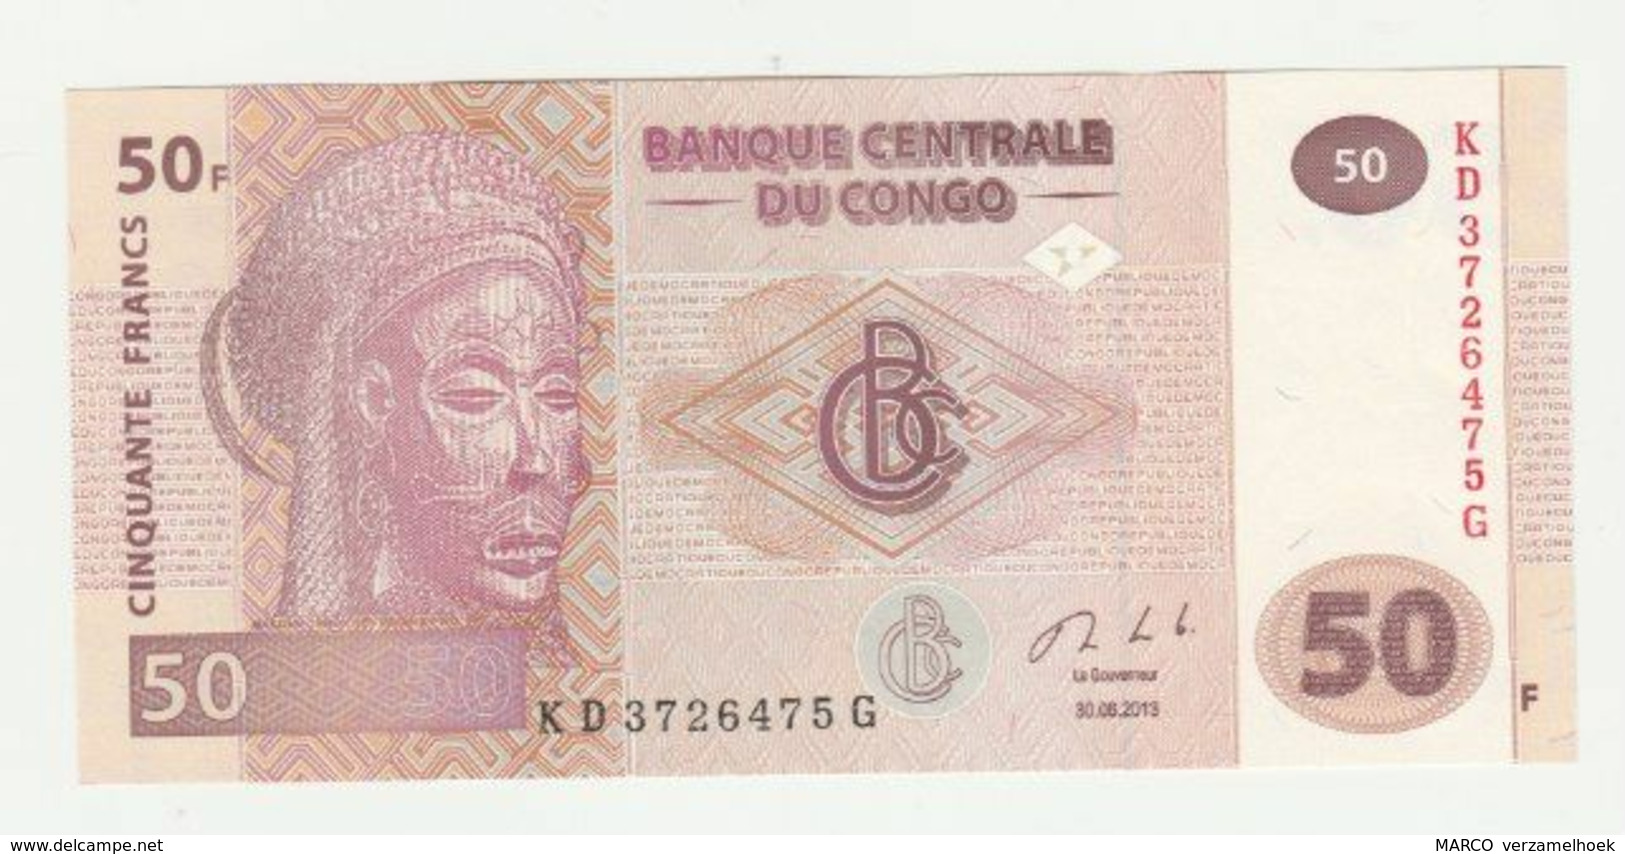 Banknote Banque Centrale Du Congo 50 Francs 2013 UNC - Democratic Republic Of The Congo & Zaire